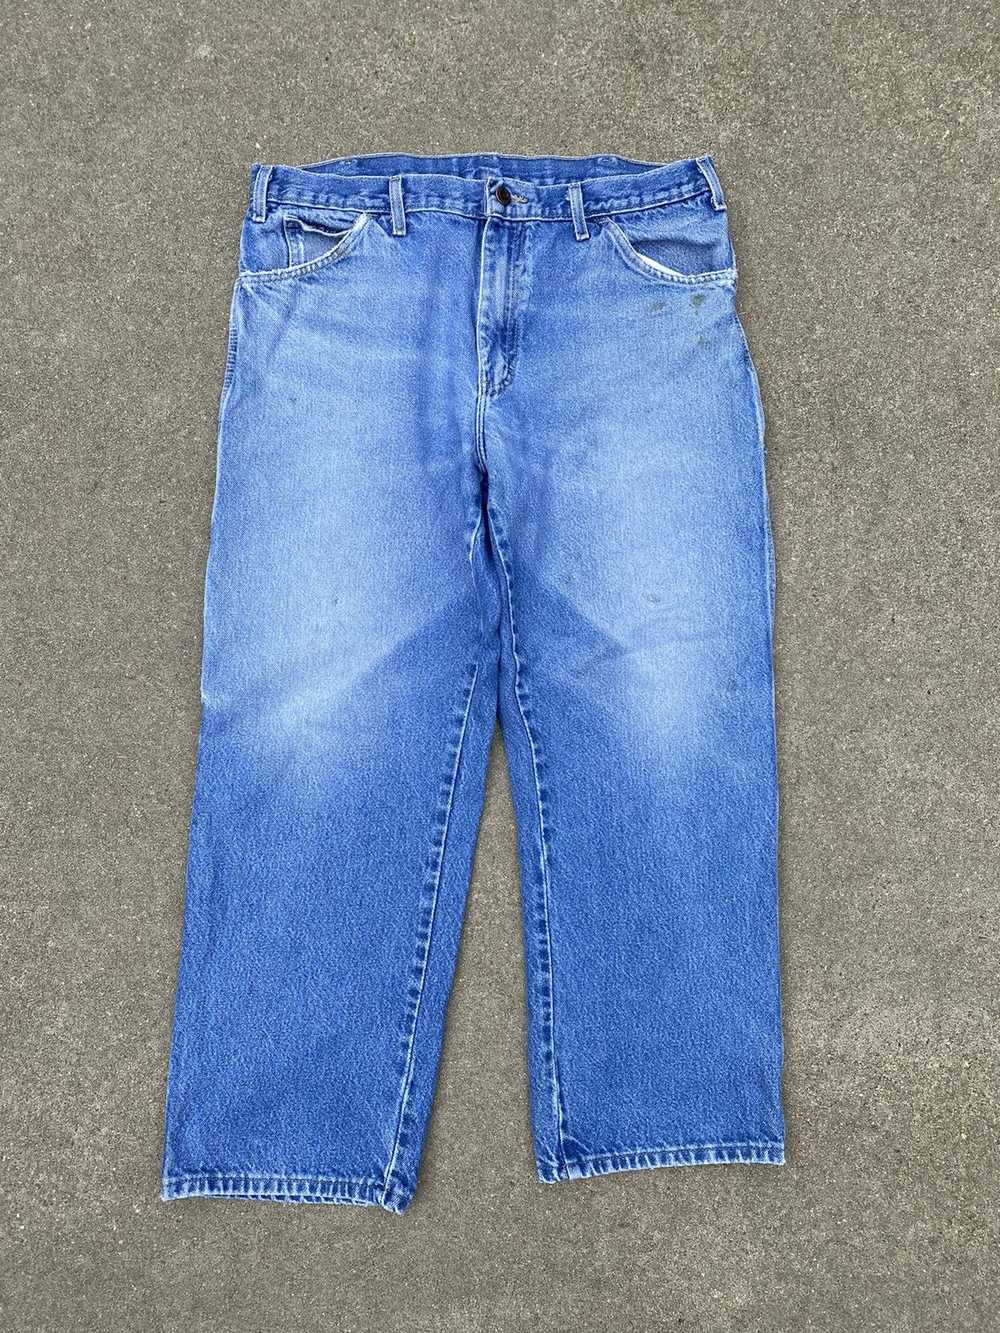 Carhartt × Dickies dickies carpenter blue jeans c… - image 3